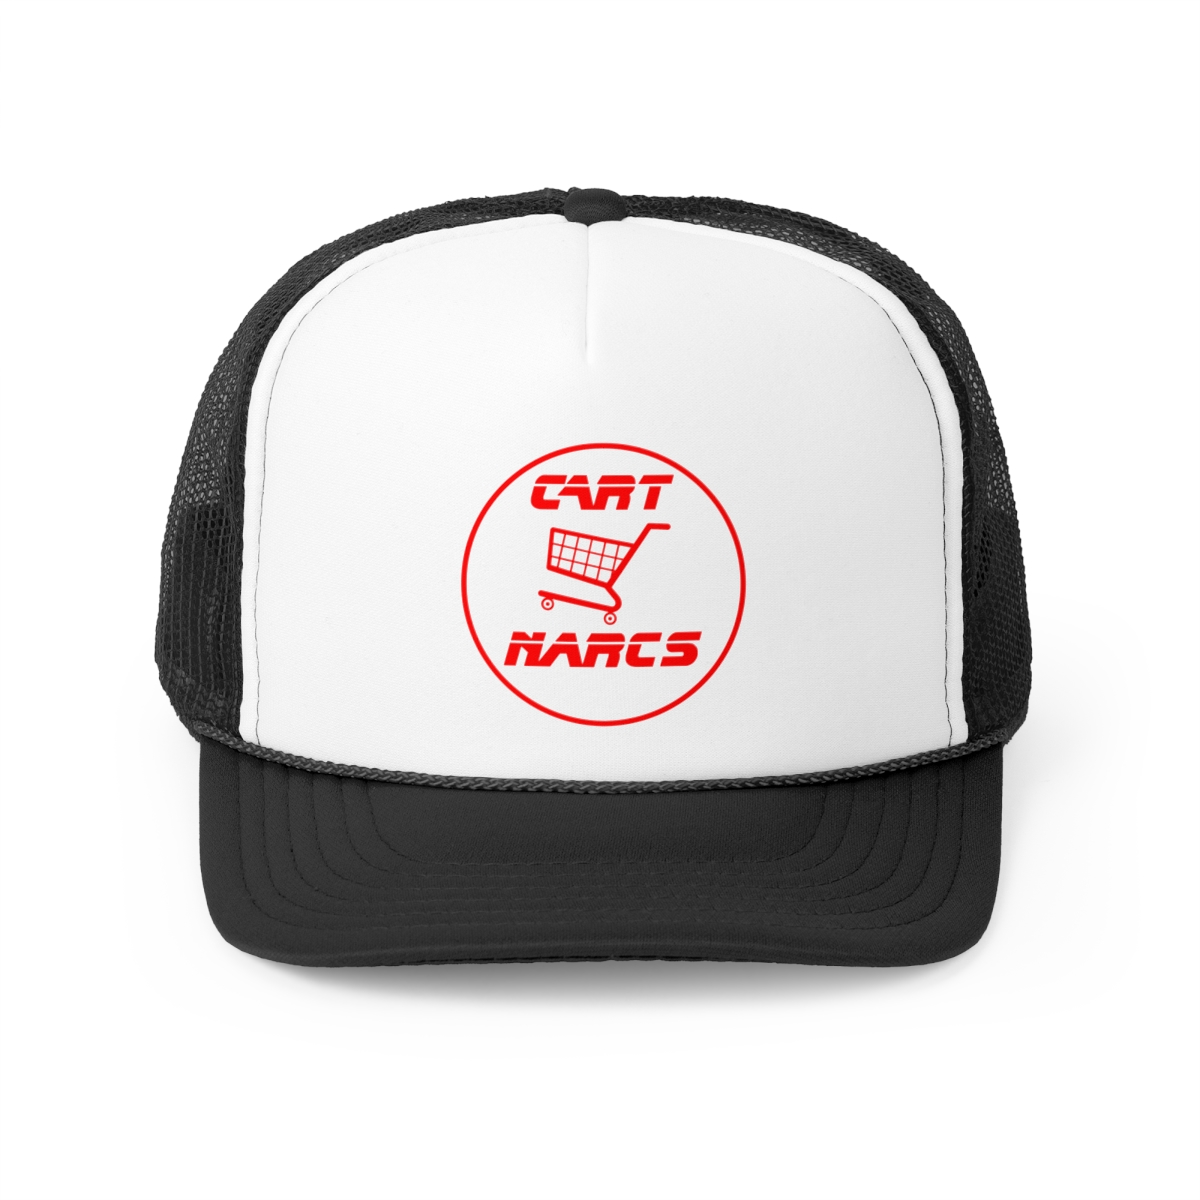 Cart Narcs Trucker Hat product thumbnail image